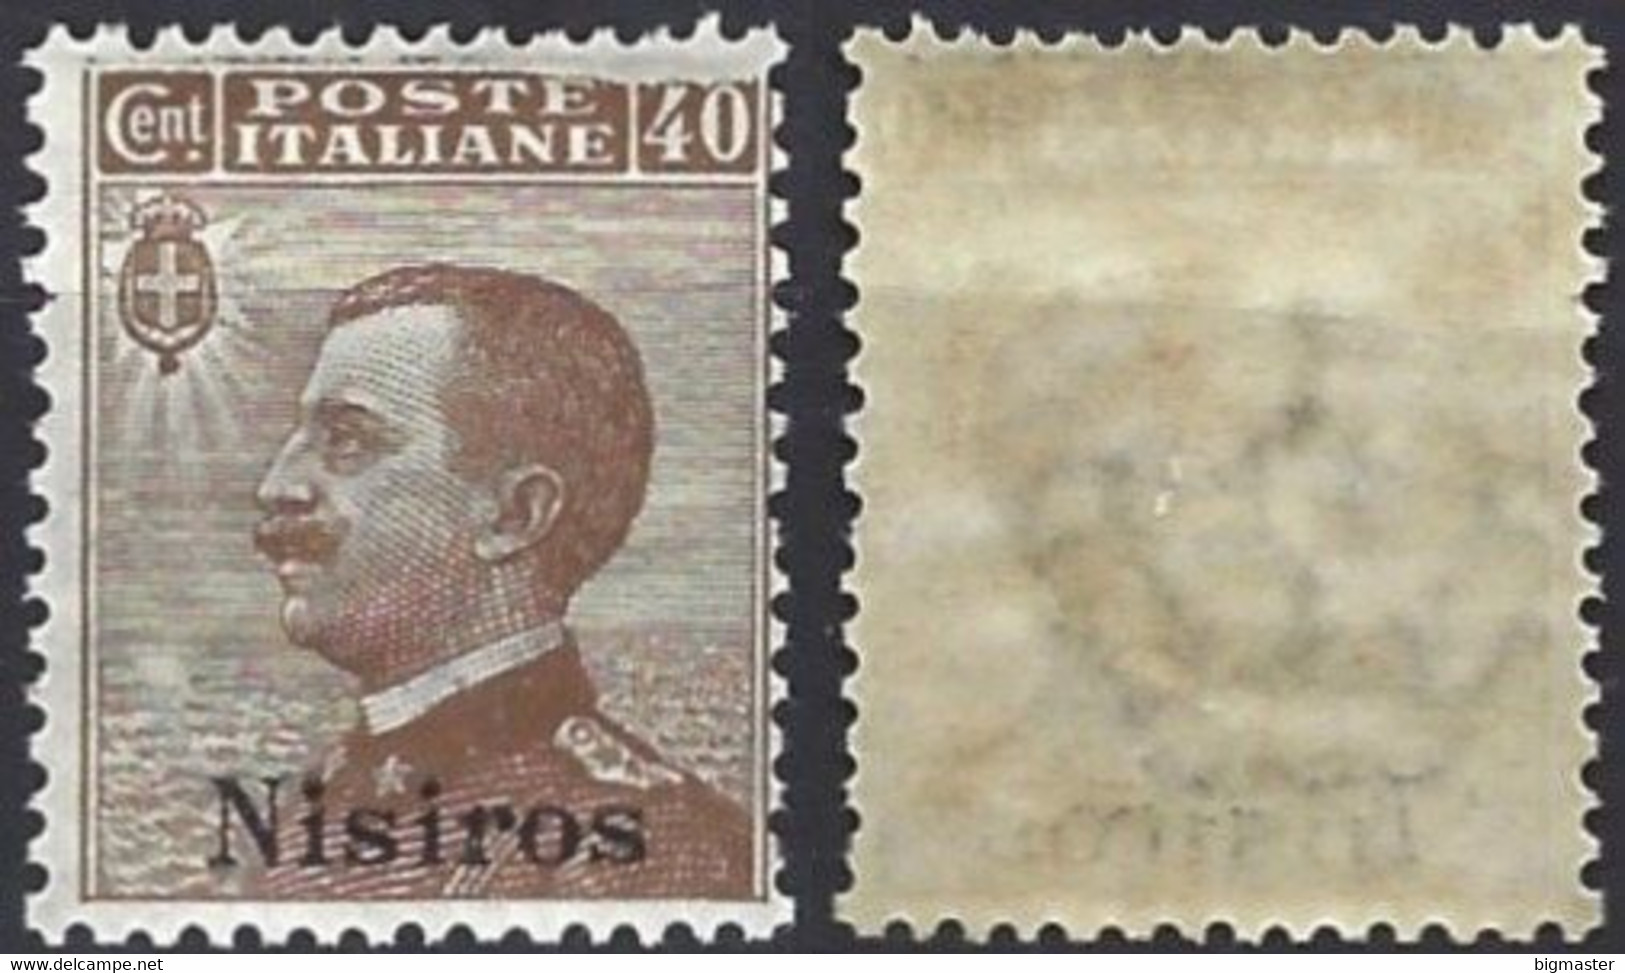 1912 Regno D'Italia IG 1912 IT-EG NI6 Franc Italia Soprast Nisiros New - Egeo (Nisiro)